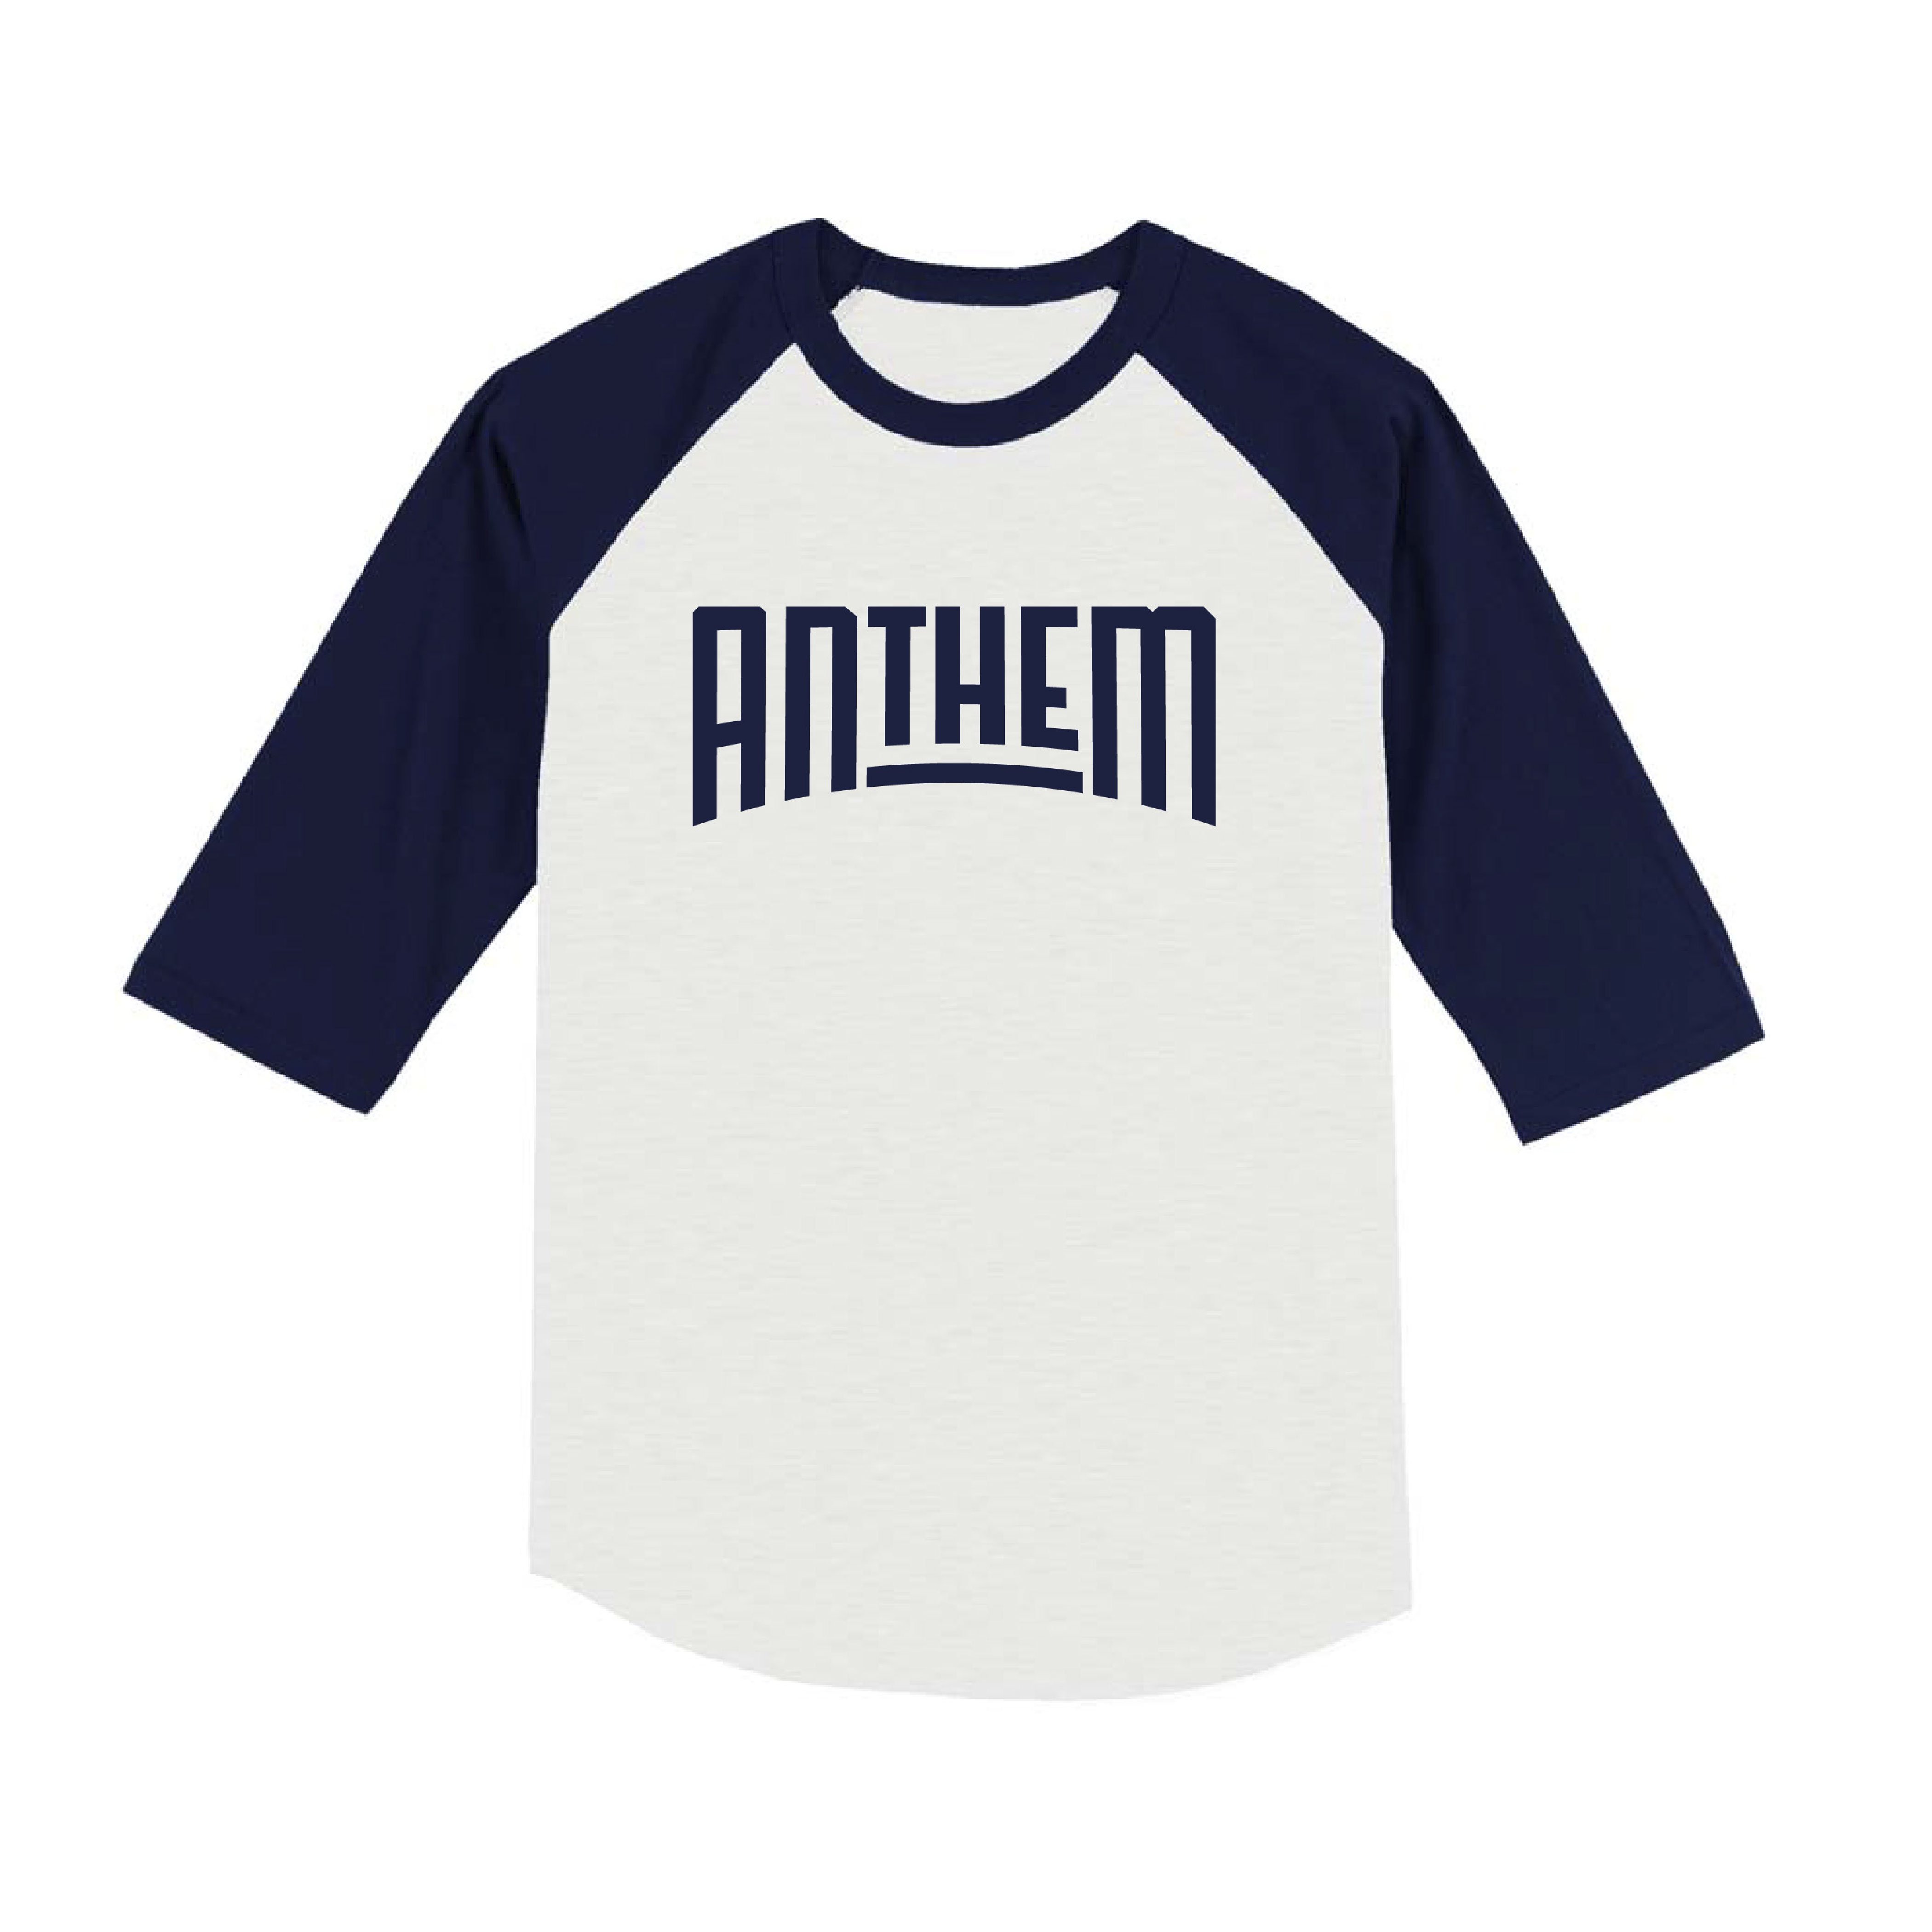 The Anthem Kids' Baseball Tee